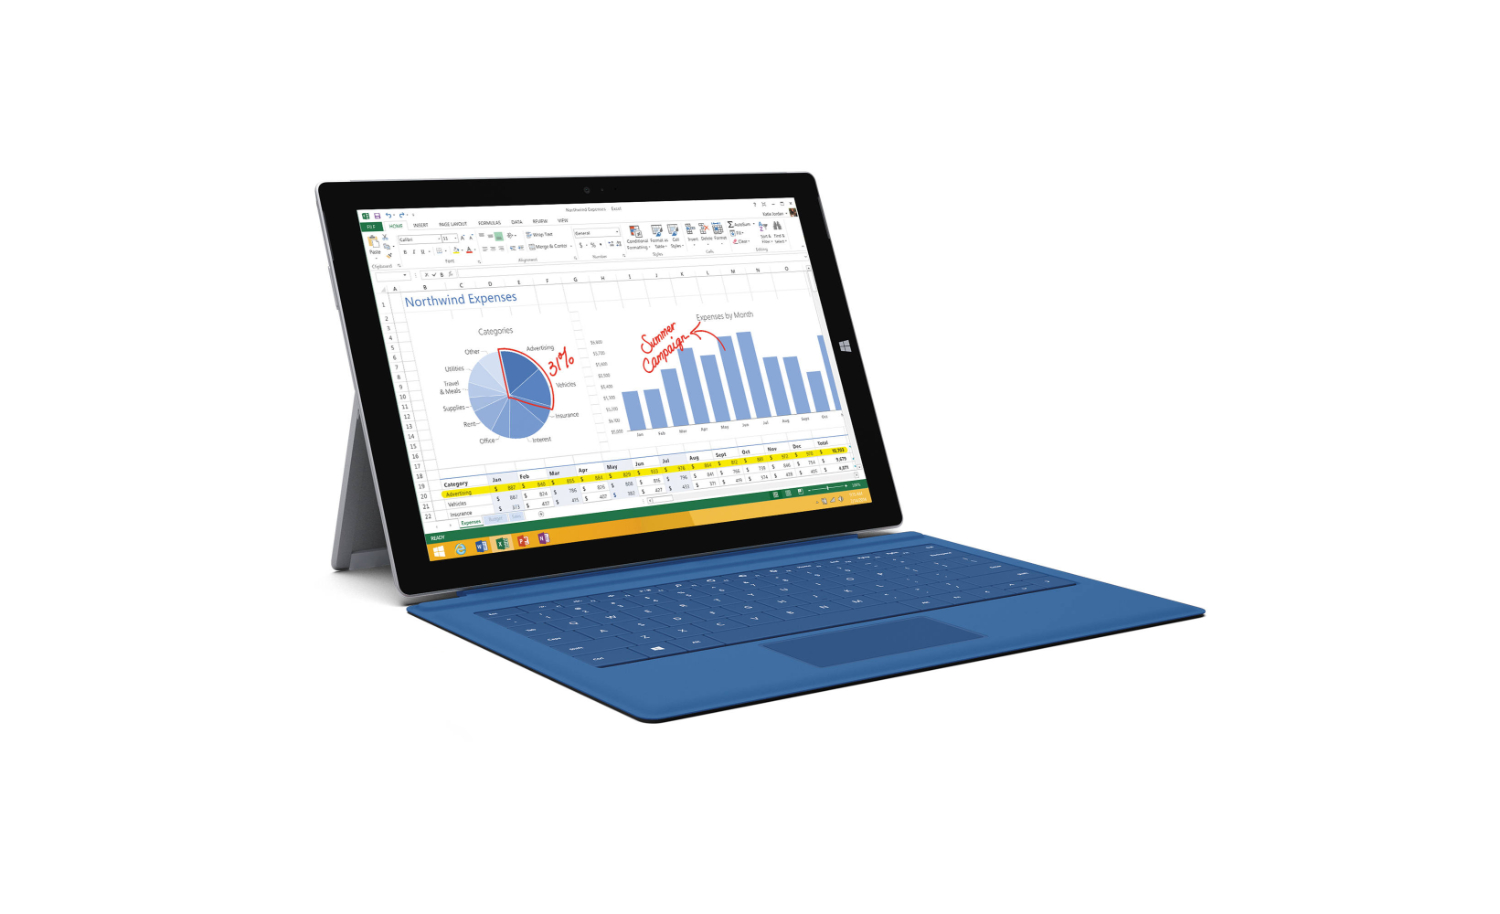 Microsoft Surface 3 Intel Atom x7Z8700 2GB RAM 62GB SSD Windows 10 Home